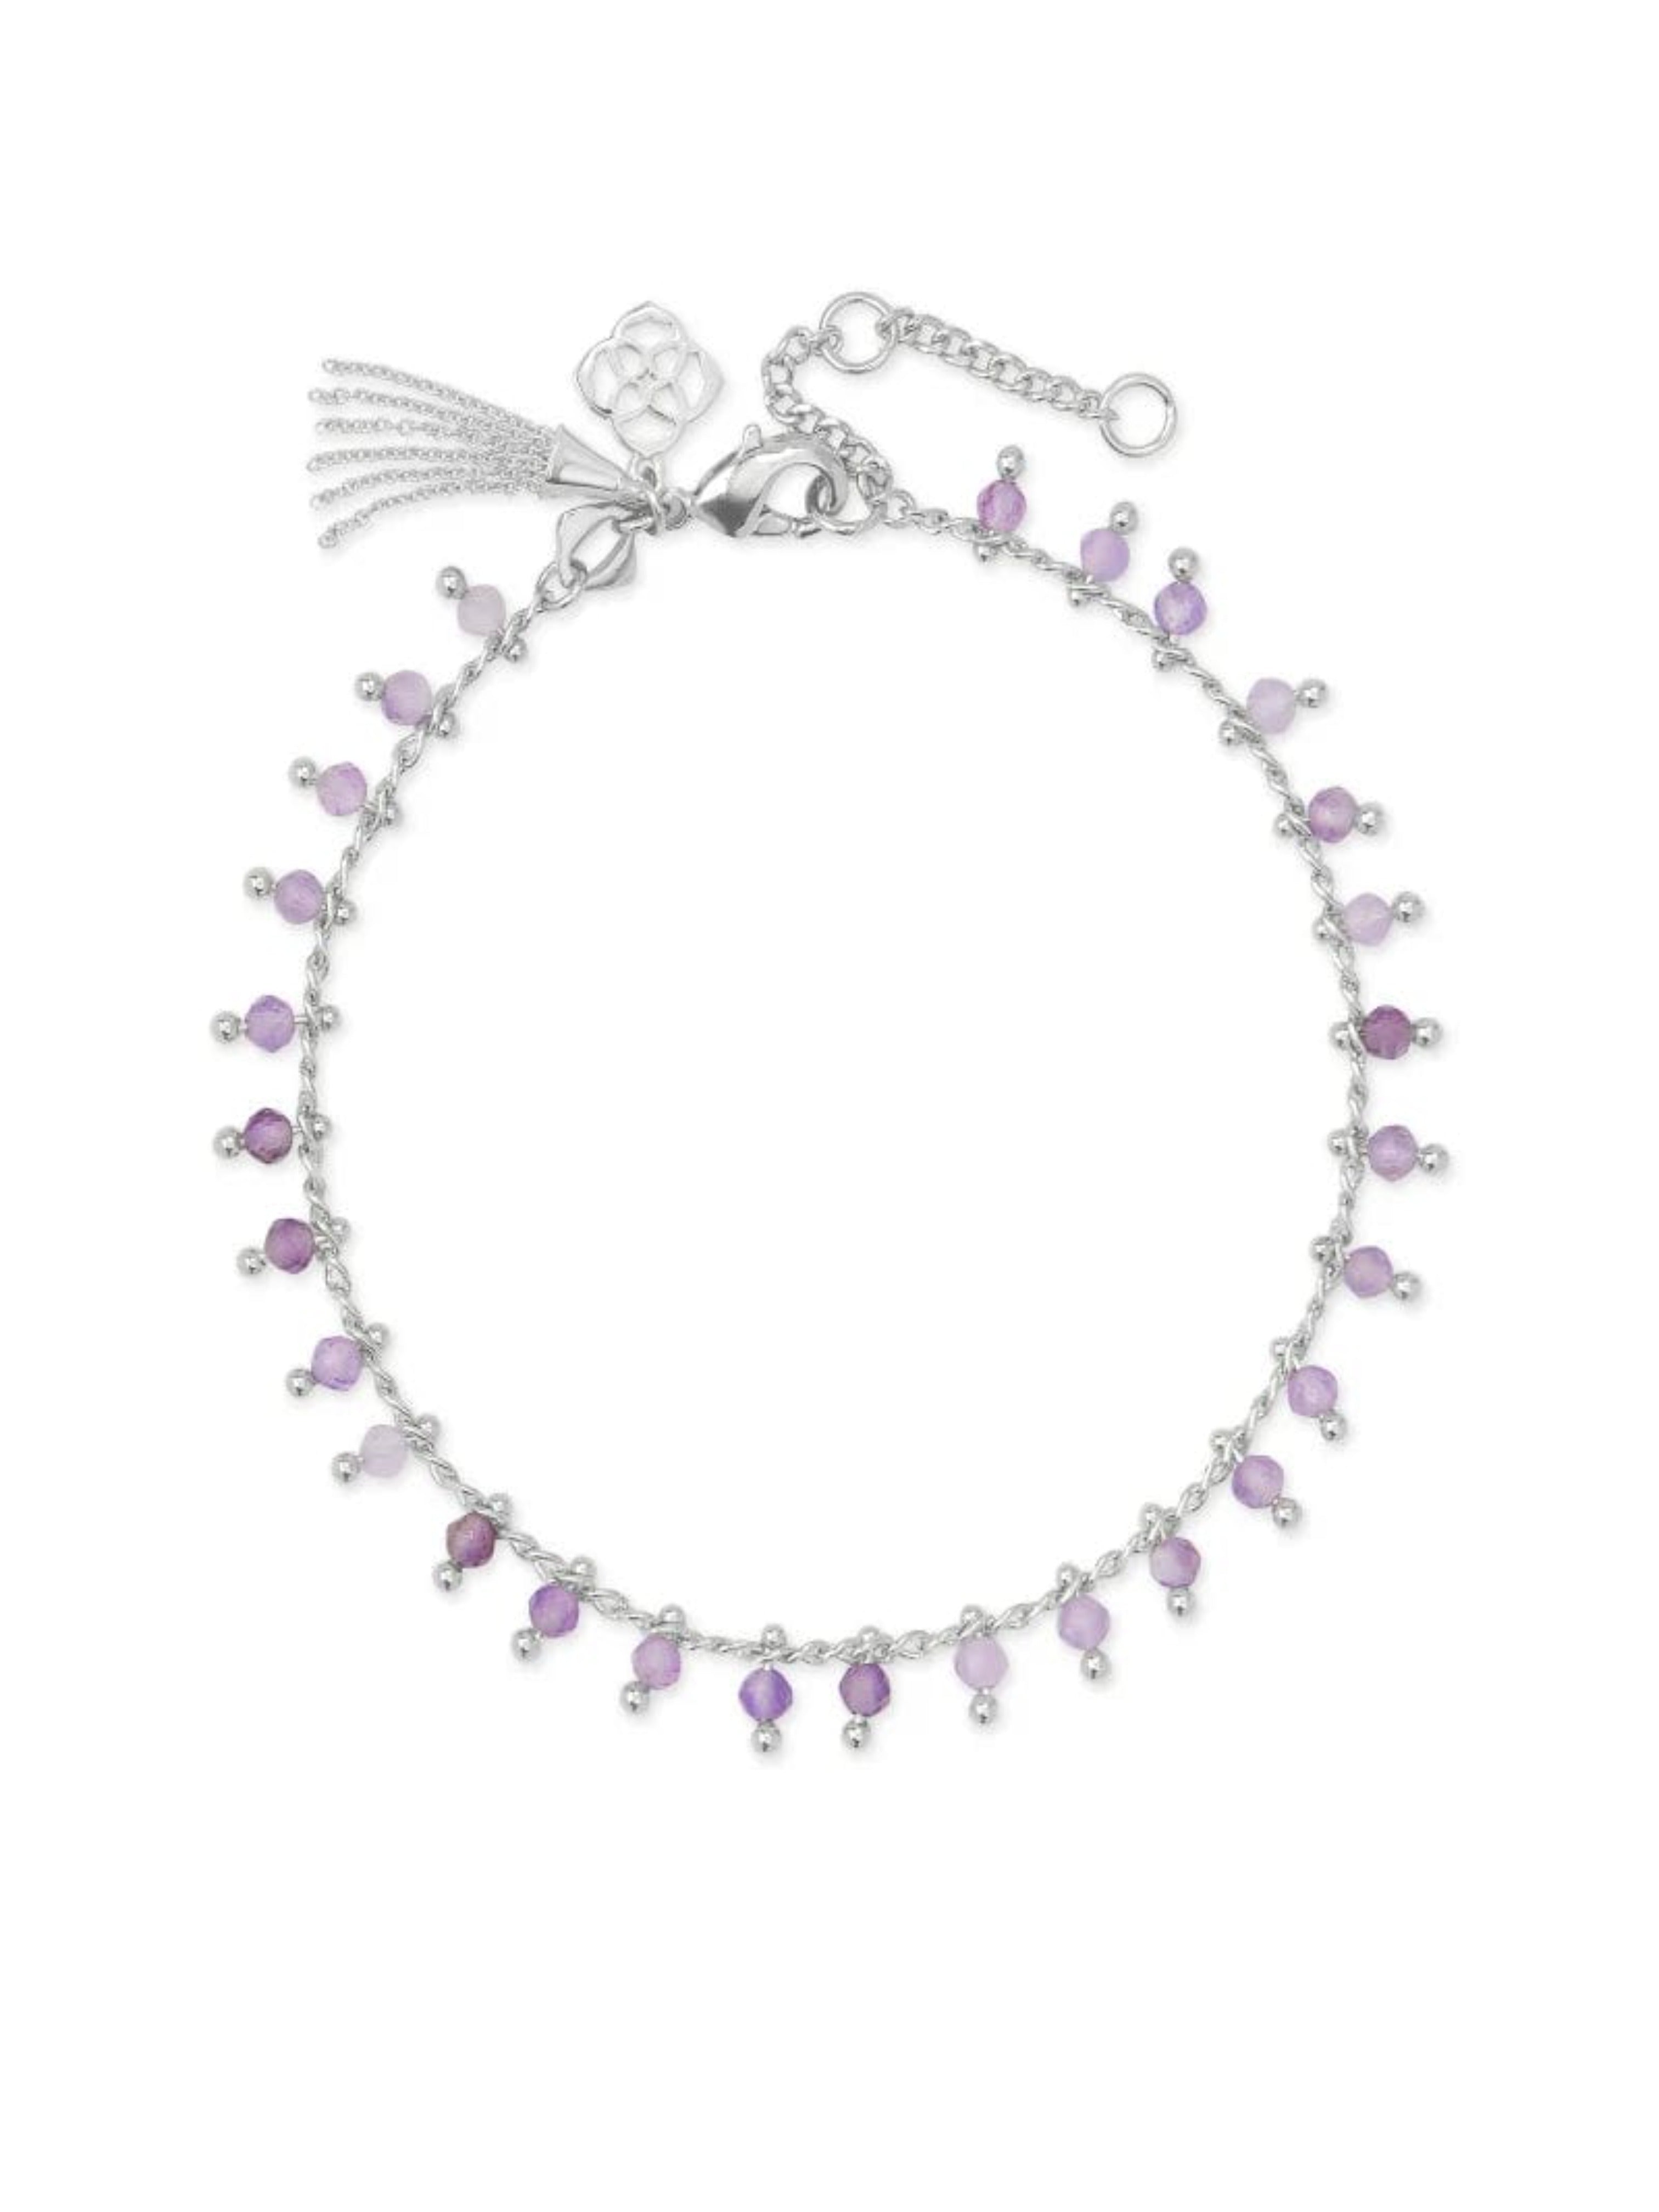 Kendra Scott Teal Tigers Eye Multi Strand Necklace | Lee Ann's Fine Jewelry  | Russellville, AR